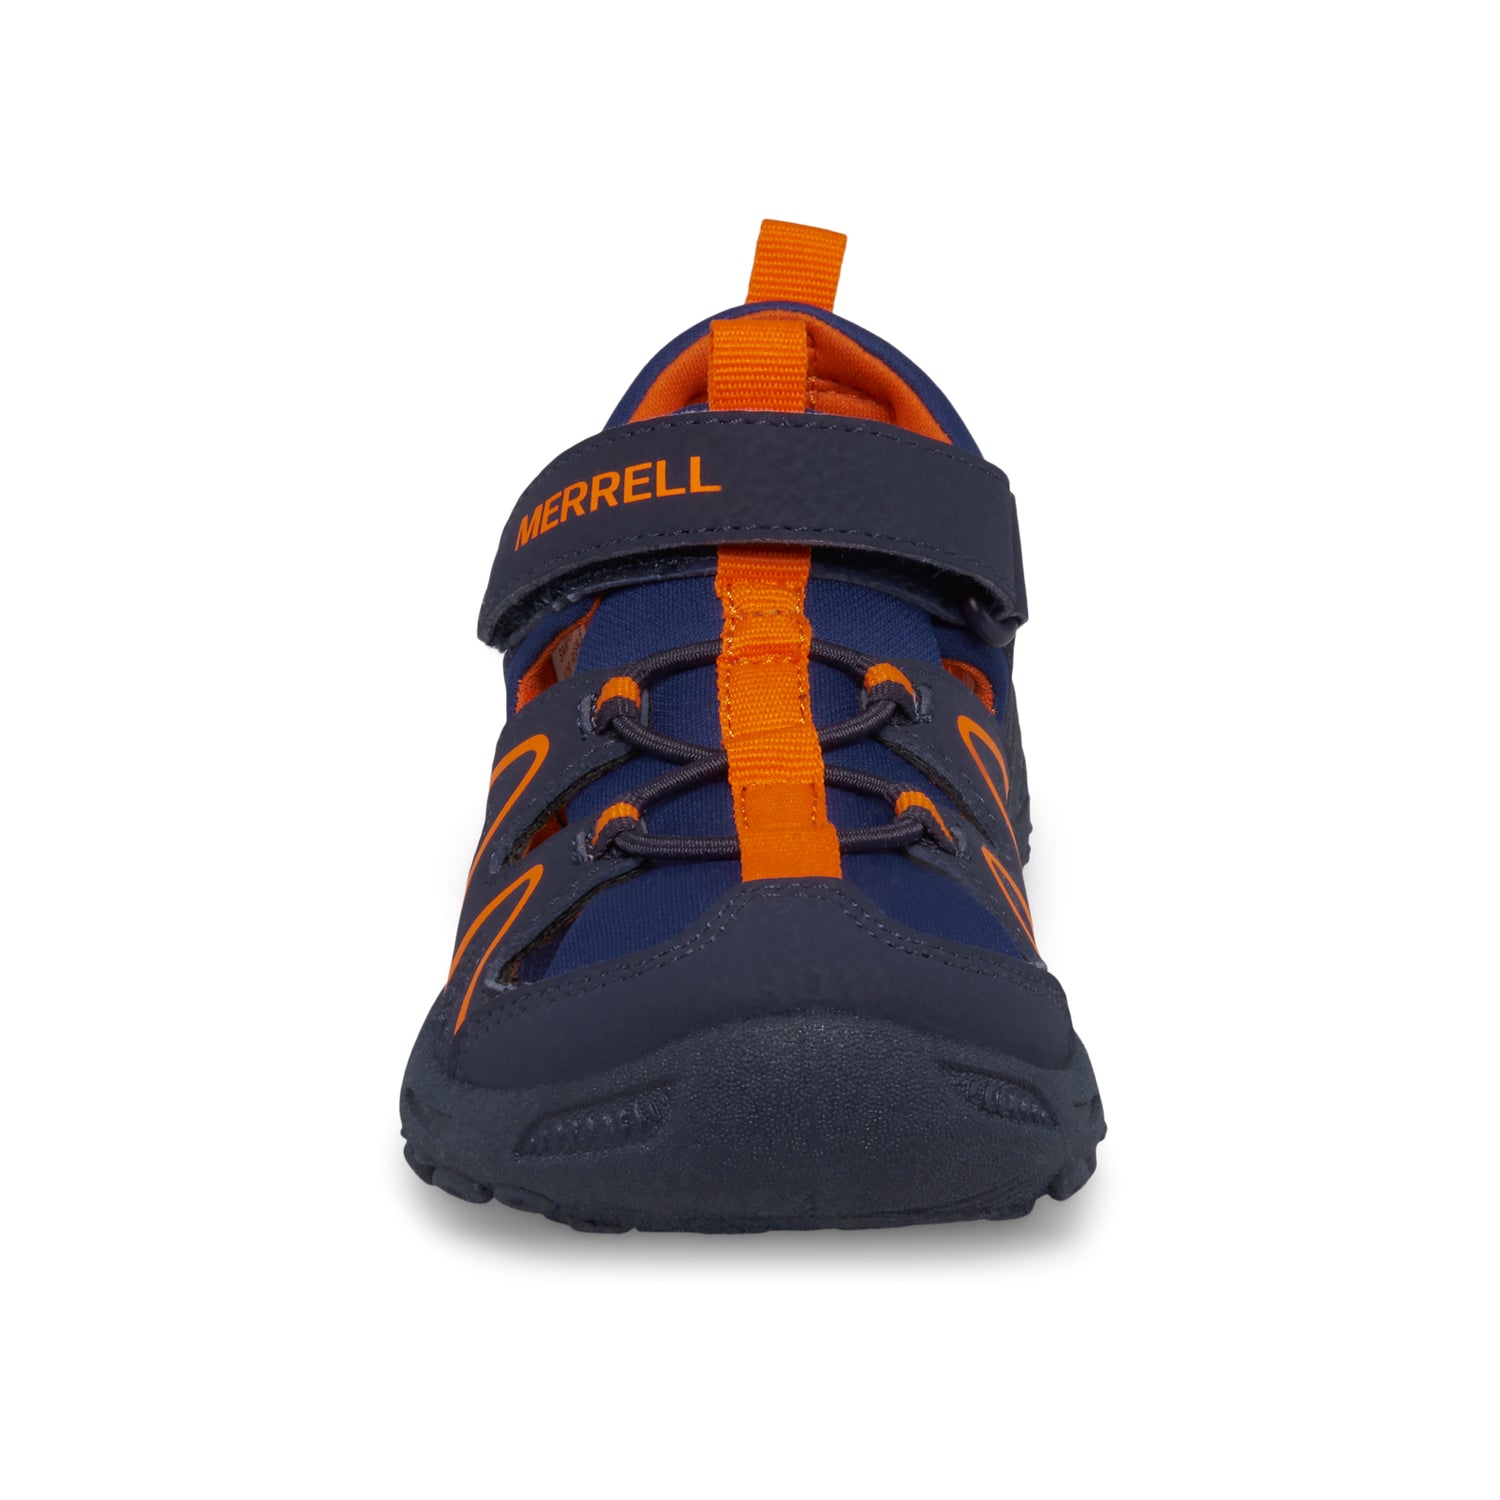 Hydro Explorer Sandal Navy/Orange